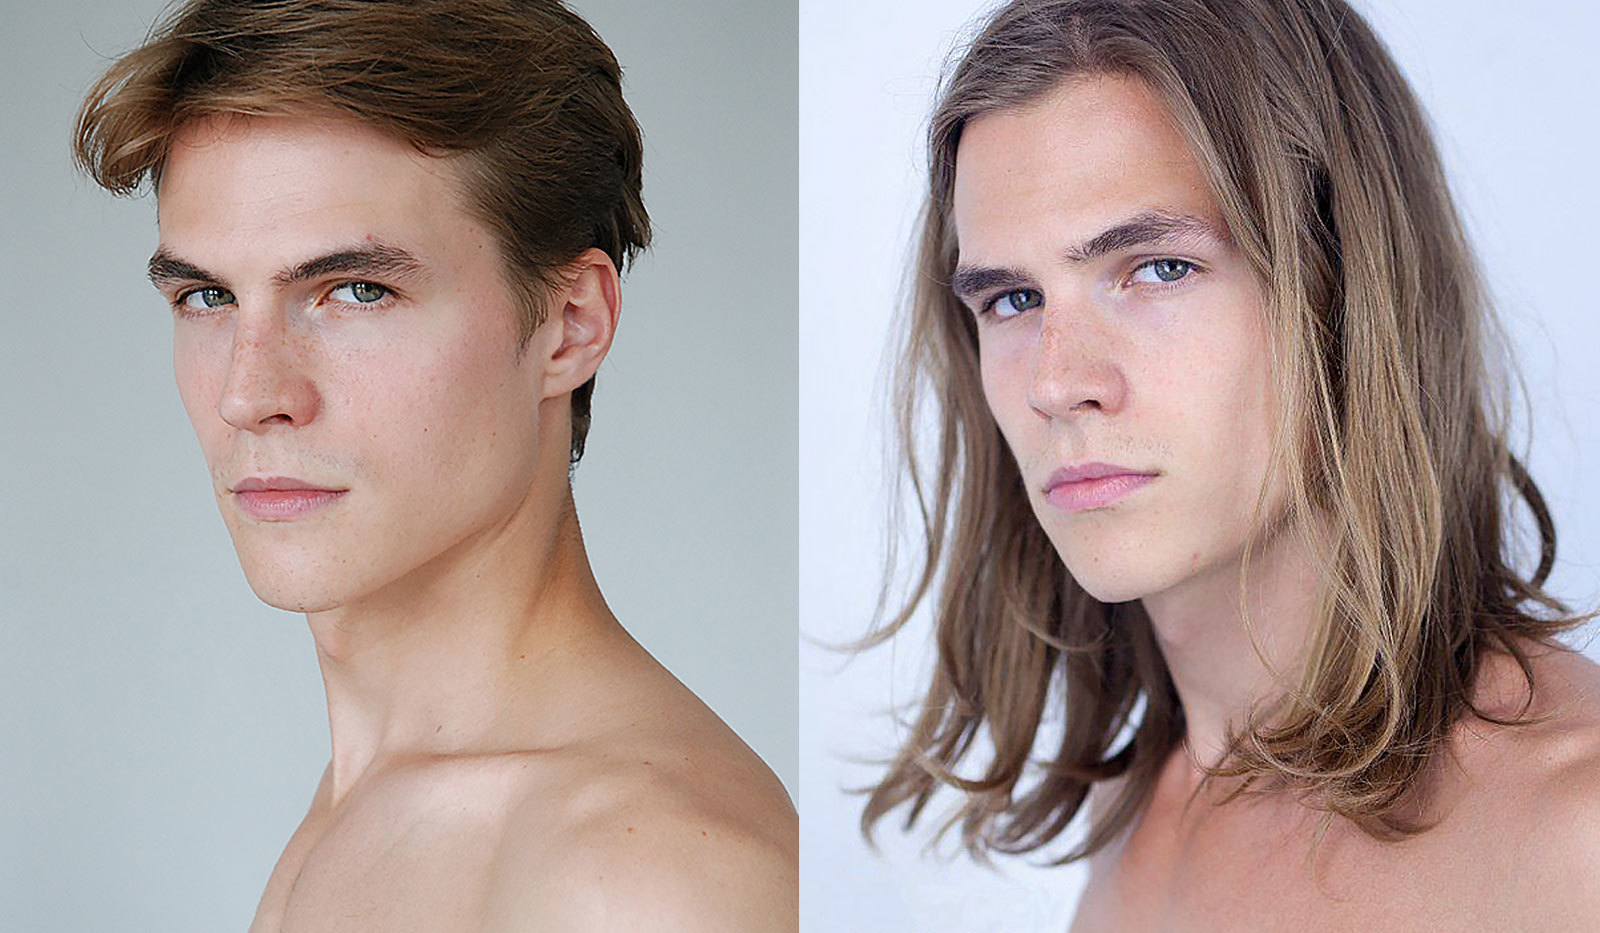 Long hair in men - yes or no? - NSFW, My, Tattoo, Long hair, Стрижка, Trend, 2020, Men and women, Longpost